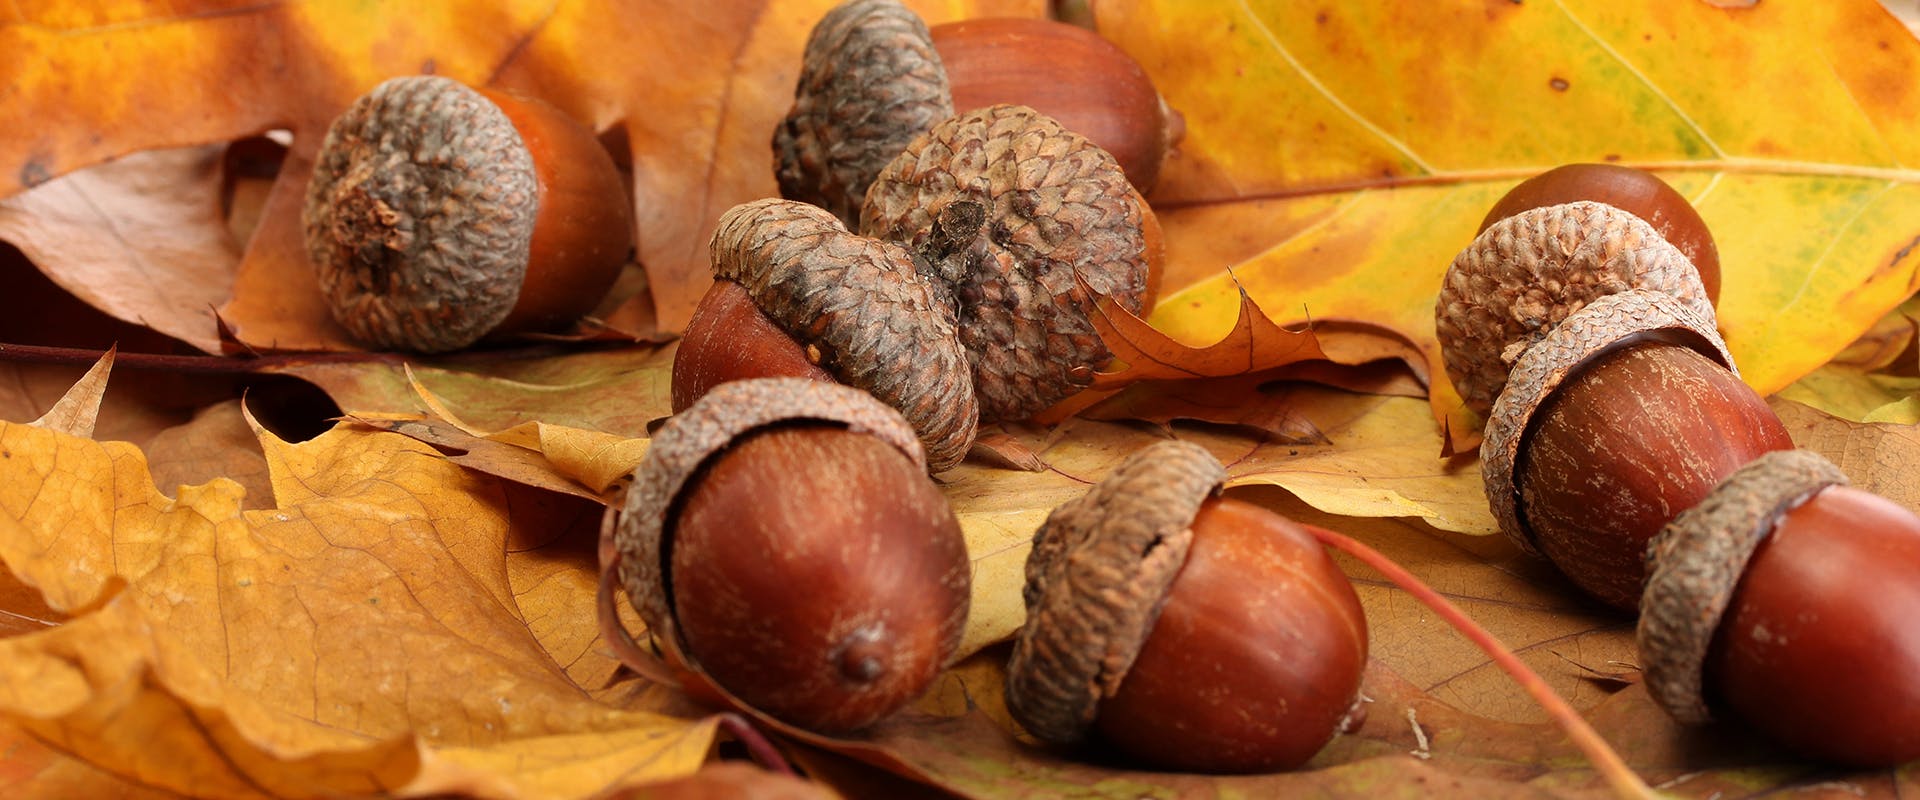 A pile of acorns on fallen autumn leaves